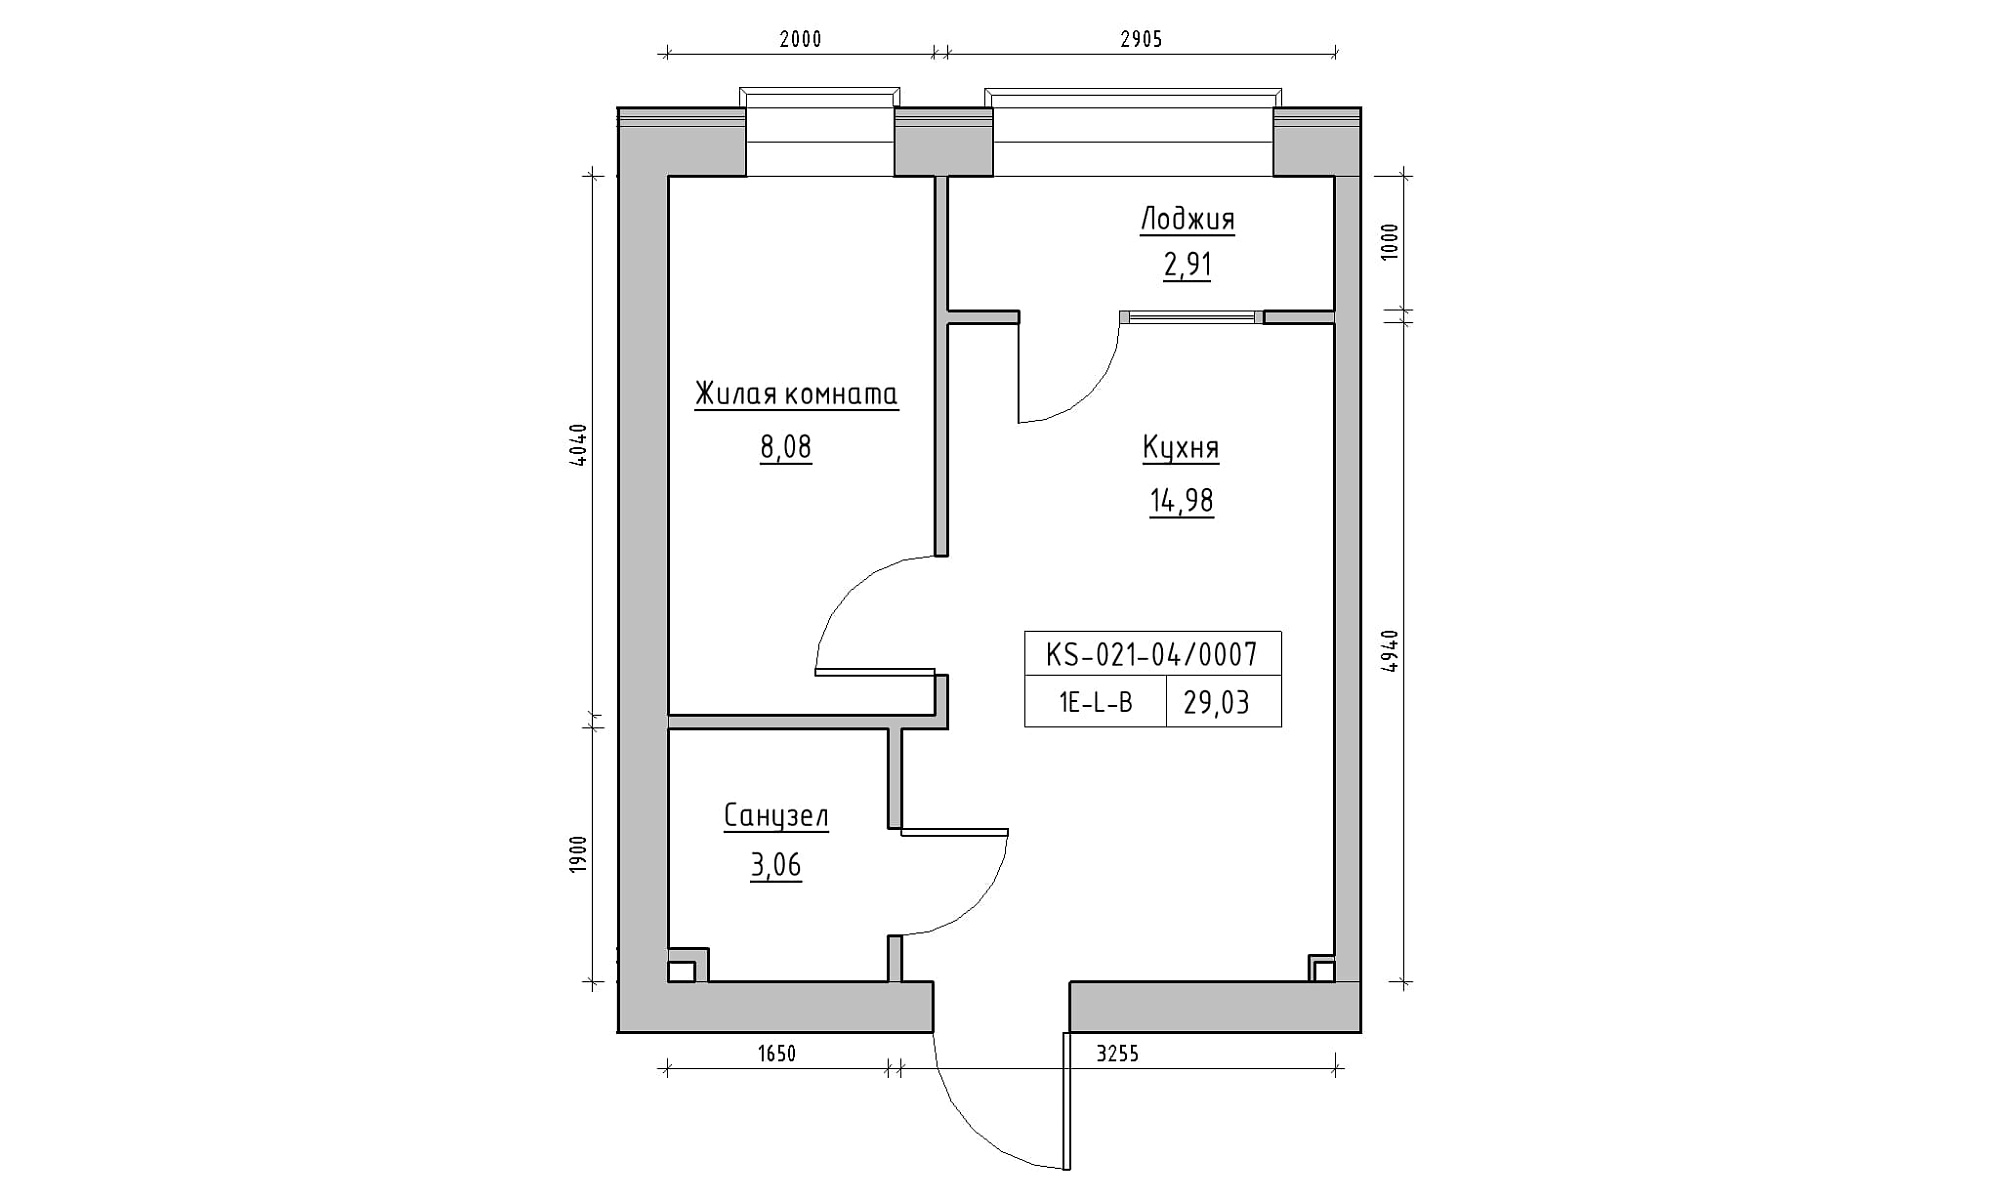 Planning 1-rm flats area 29.03m2, KS-021-04/0007.